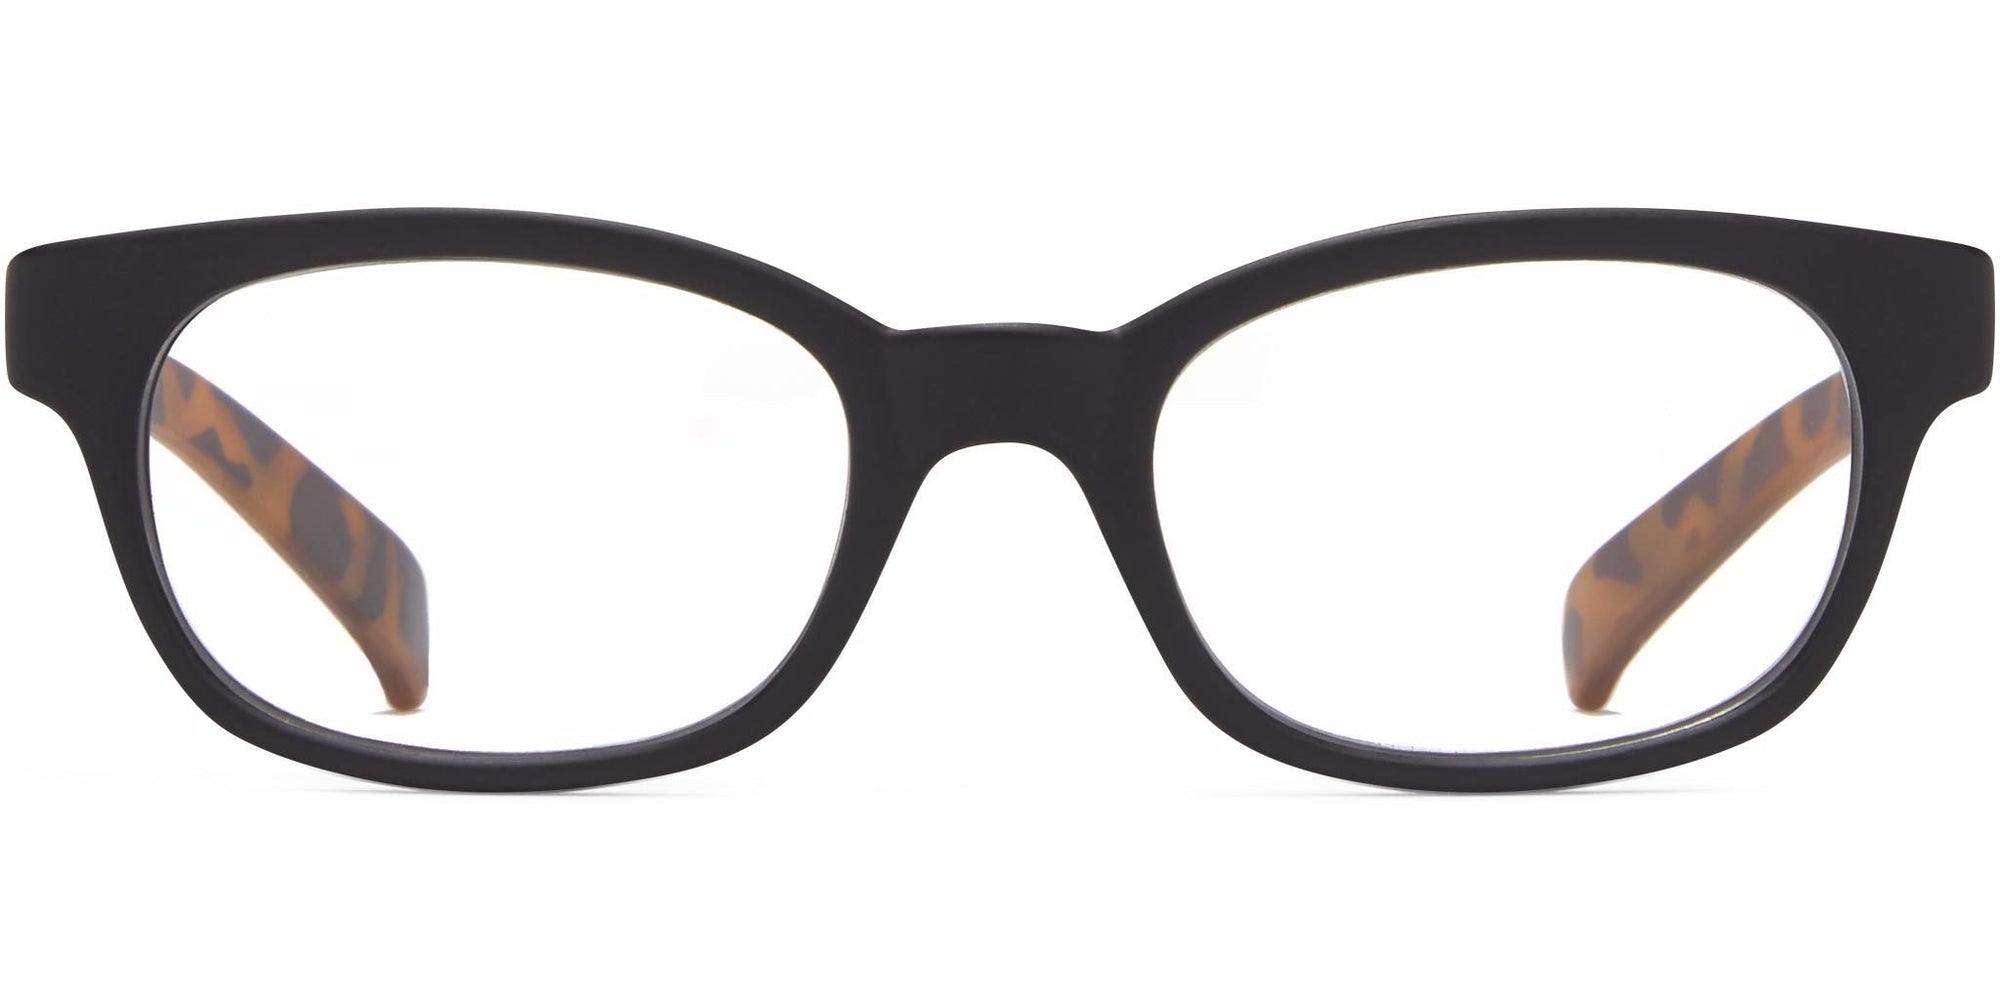 Berkeley - Black and Tortoise / 1.25 - Reading Glasses